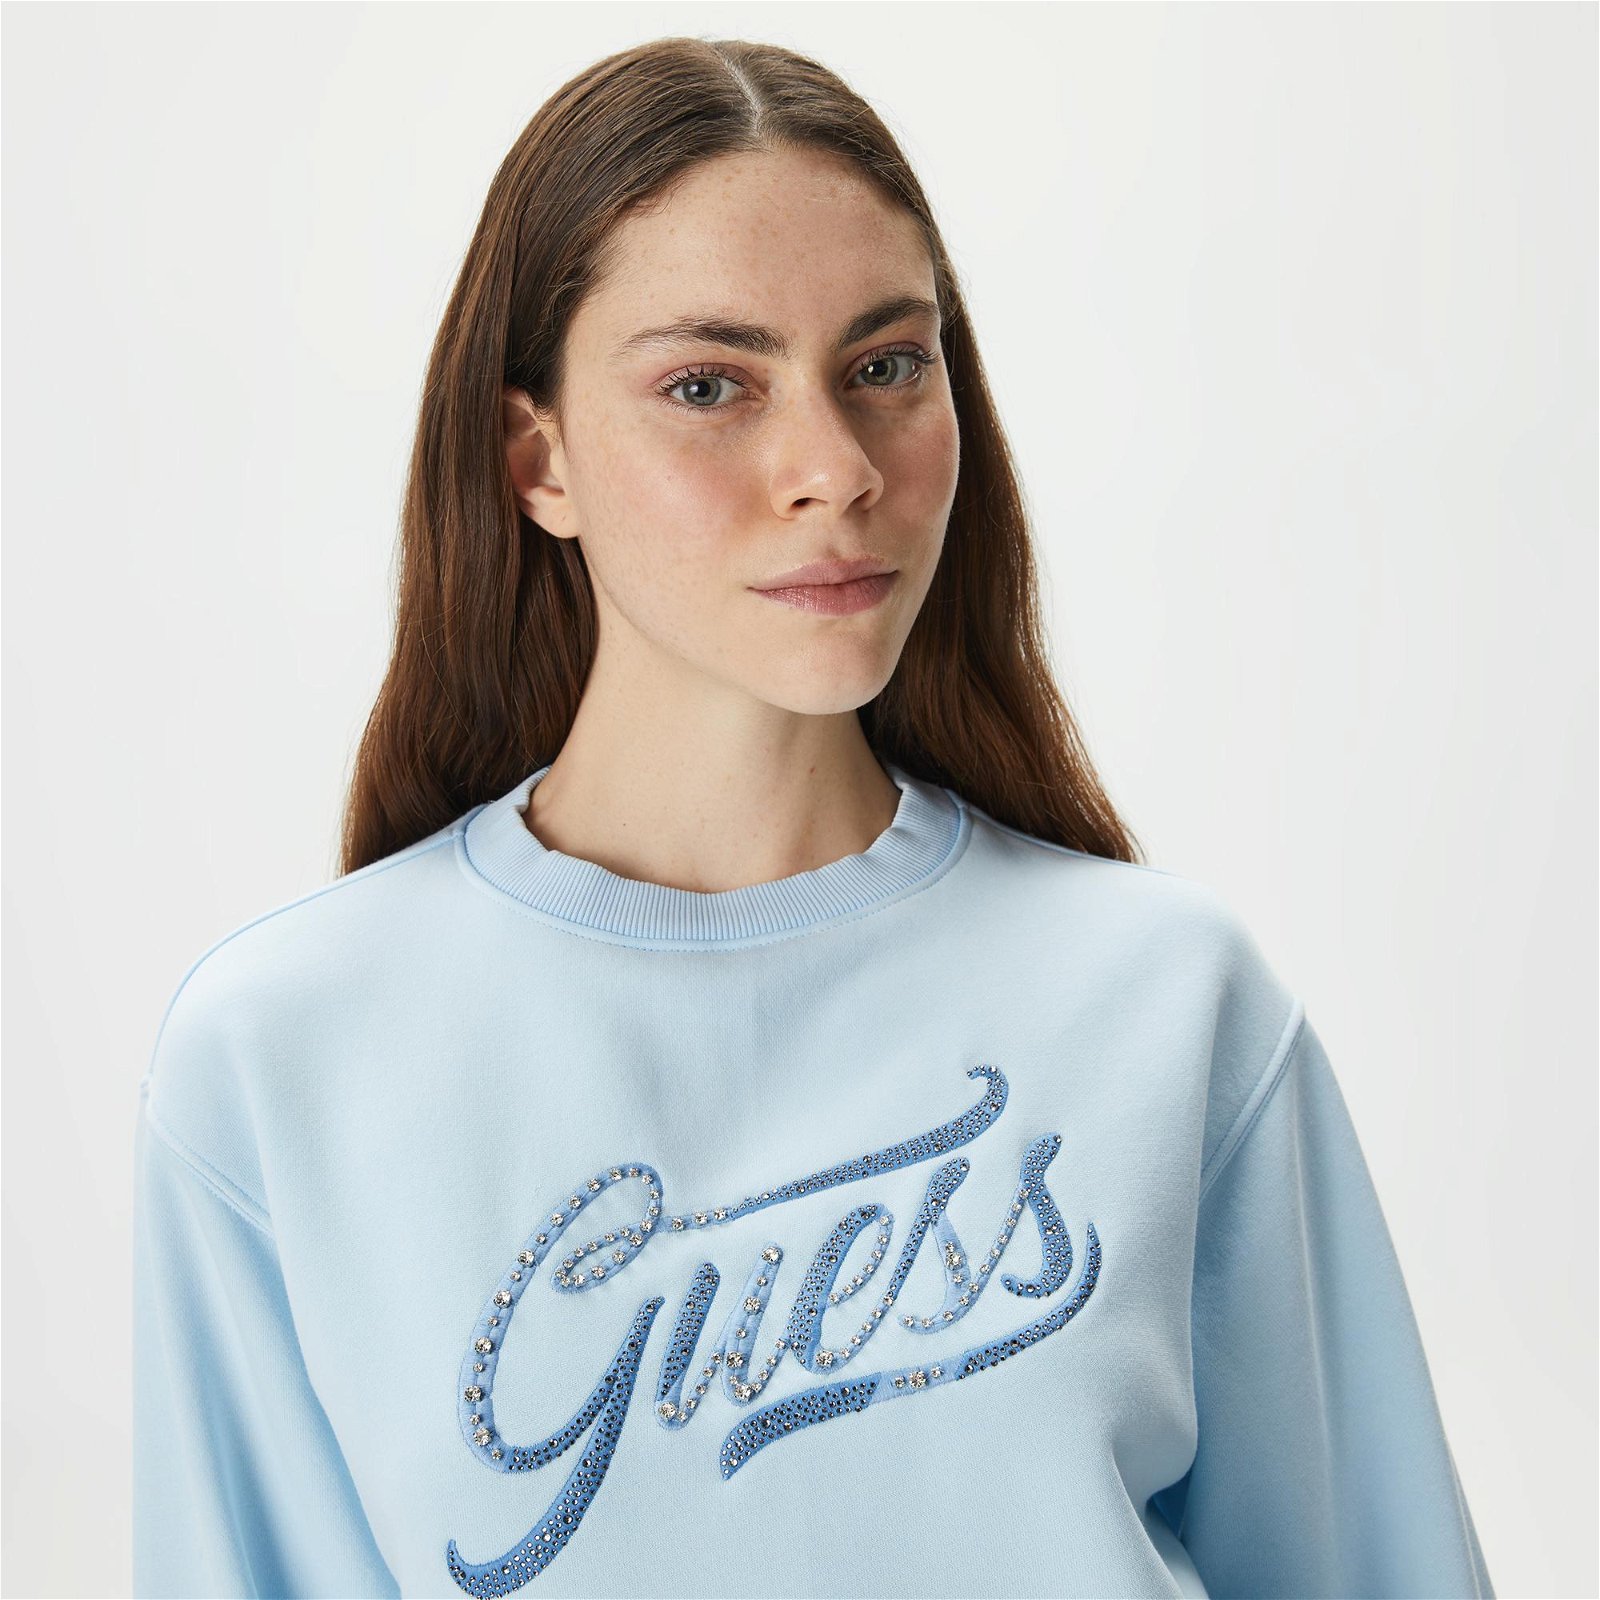 Guess CN Stones Kadın Mavi Sweatshirt